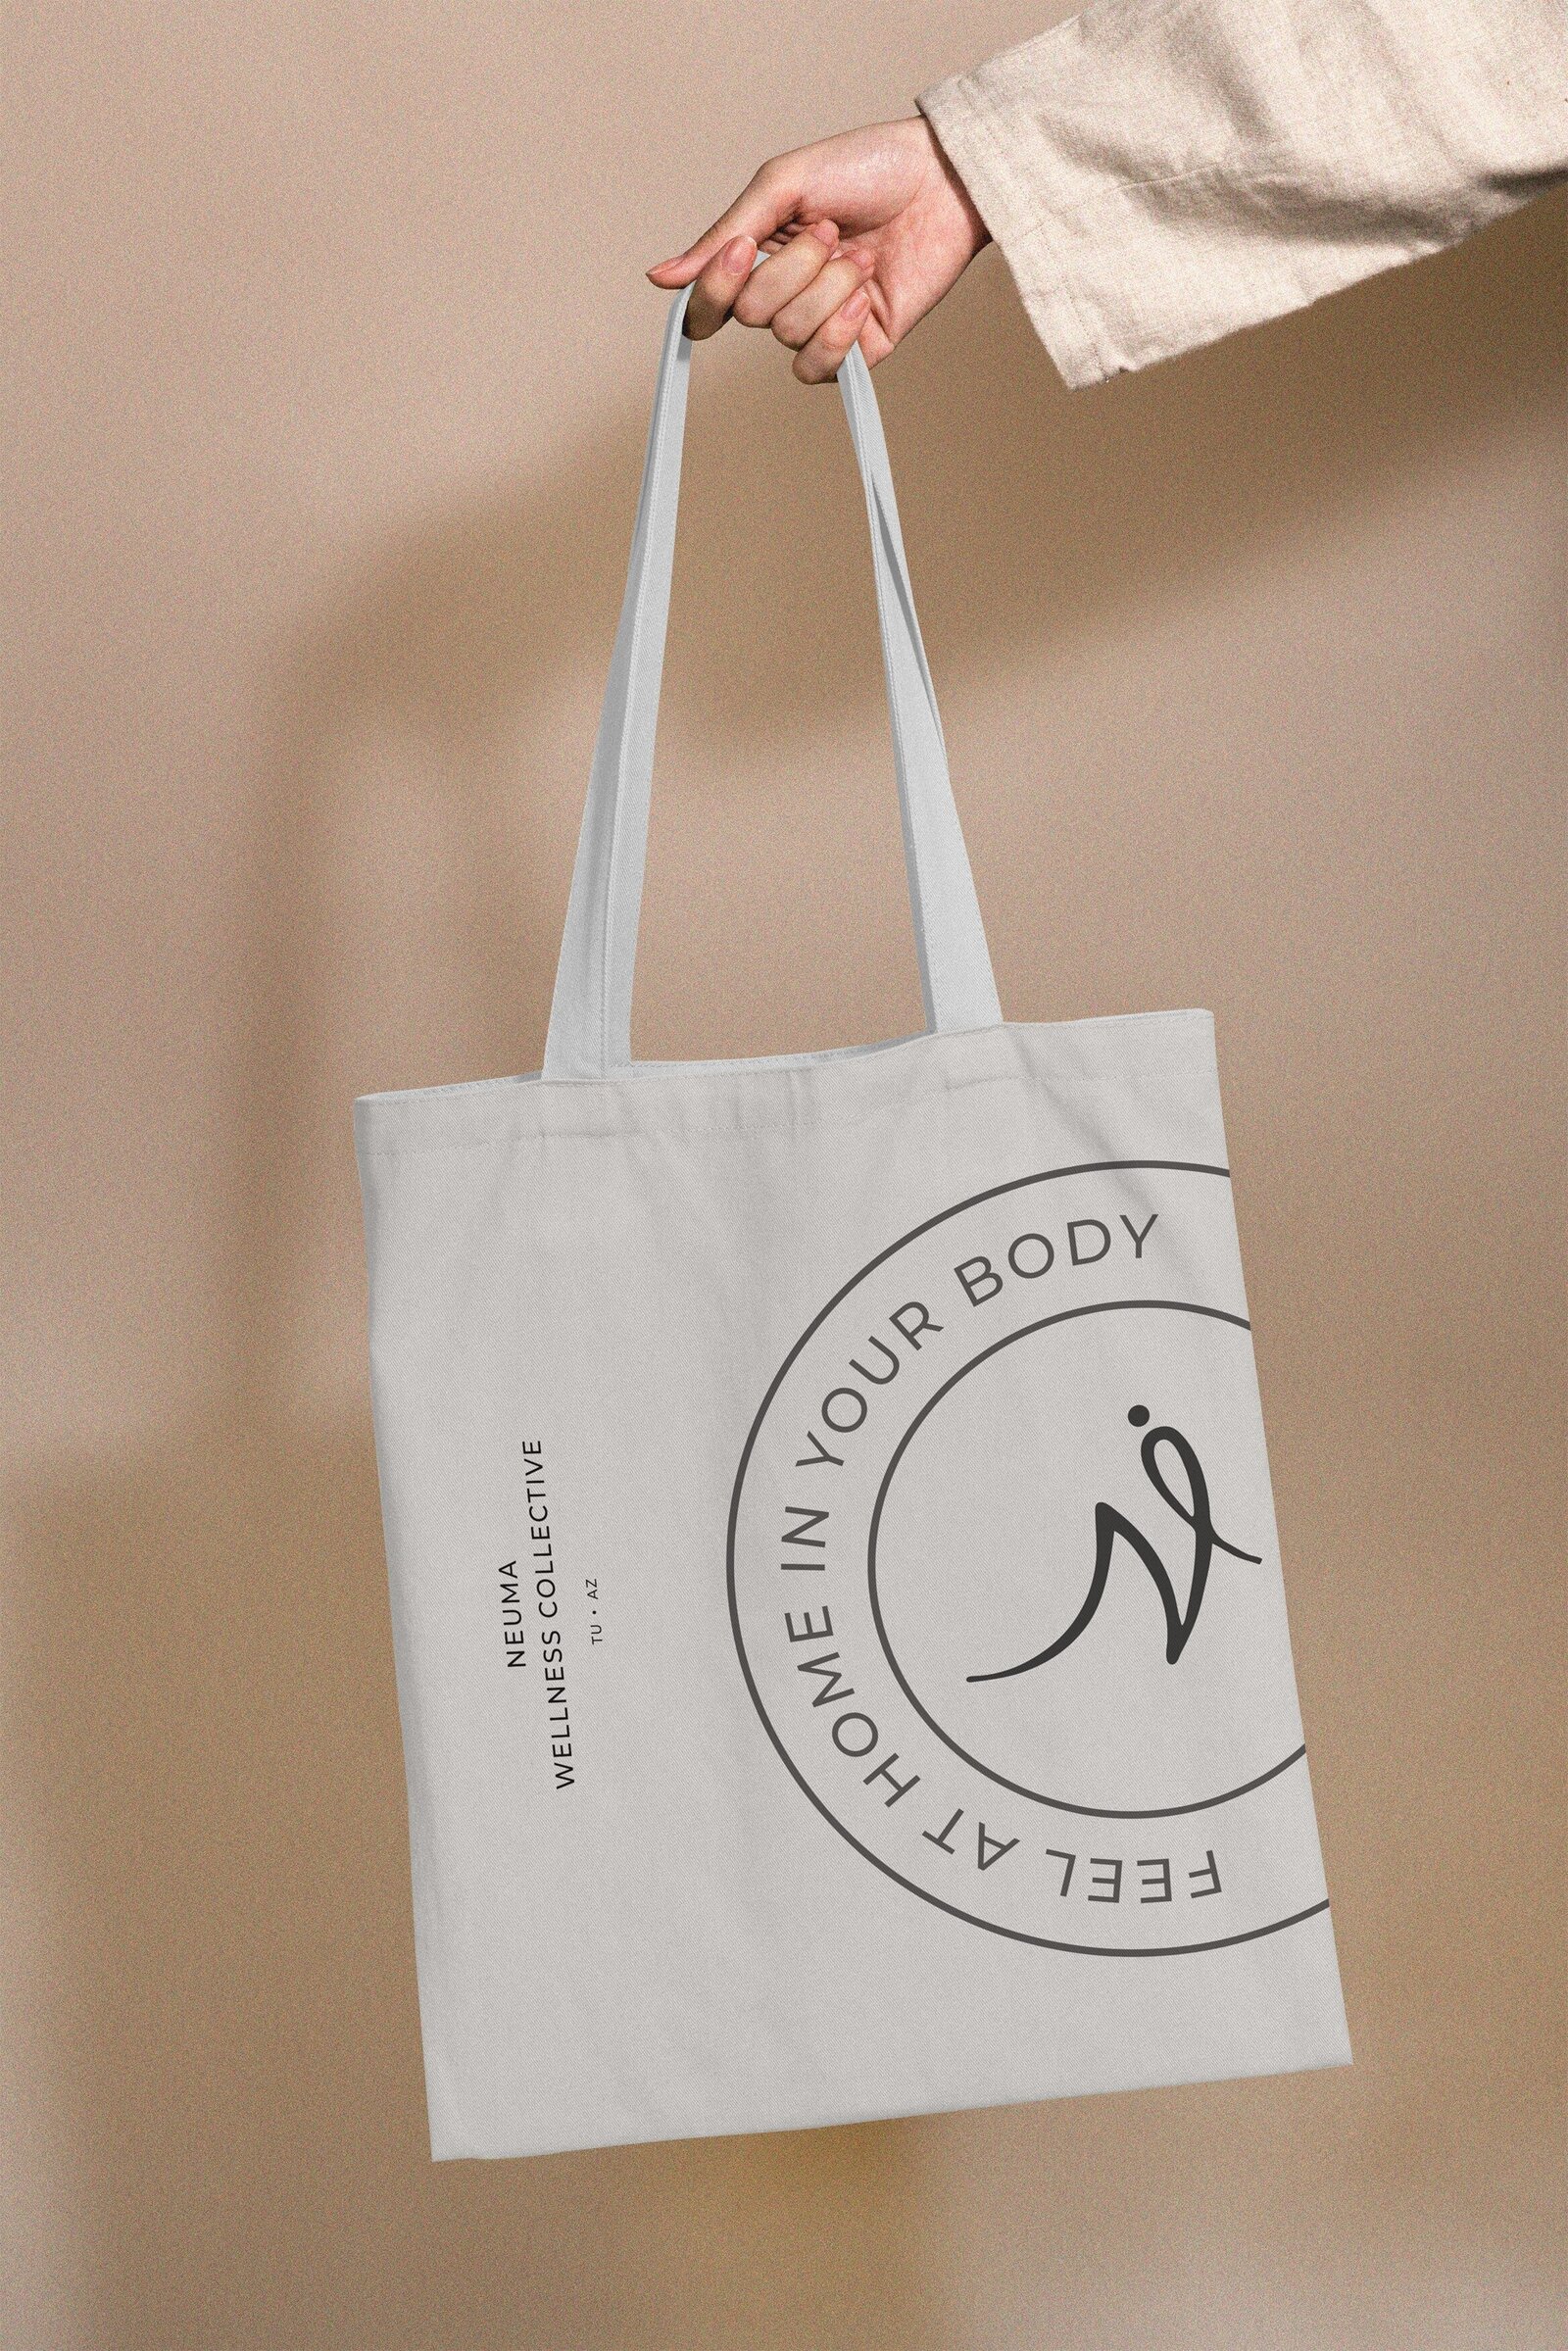 tote-bag-branding-design-for-wellness-clinic